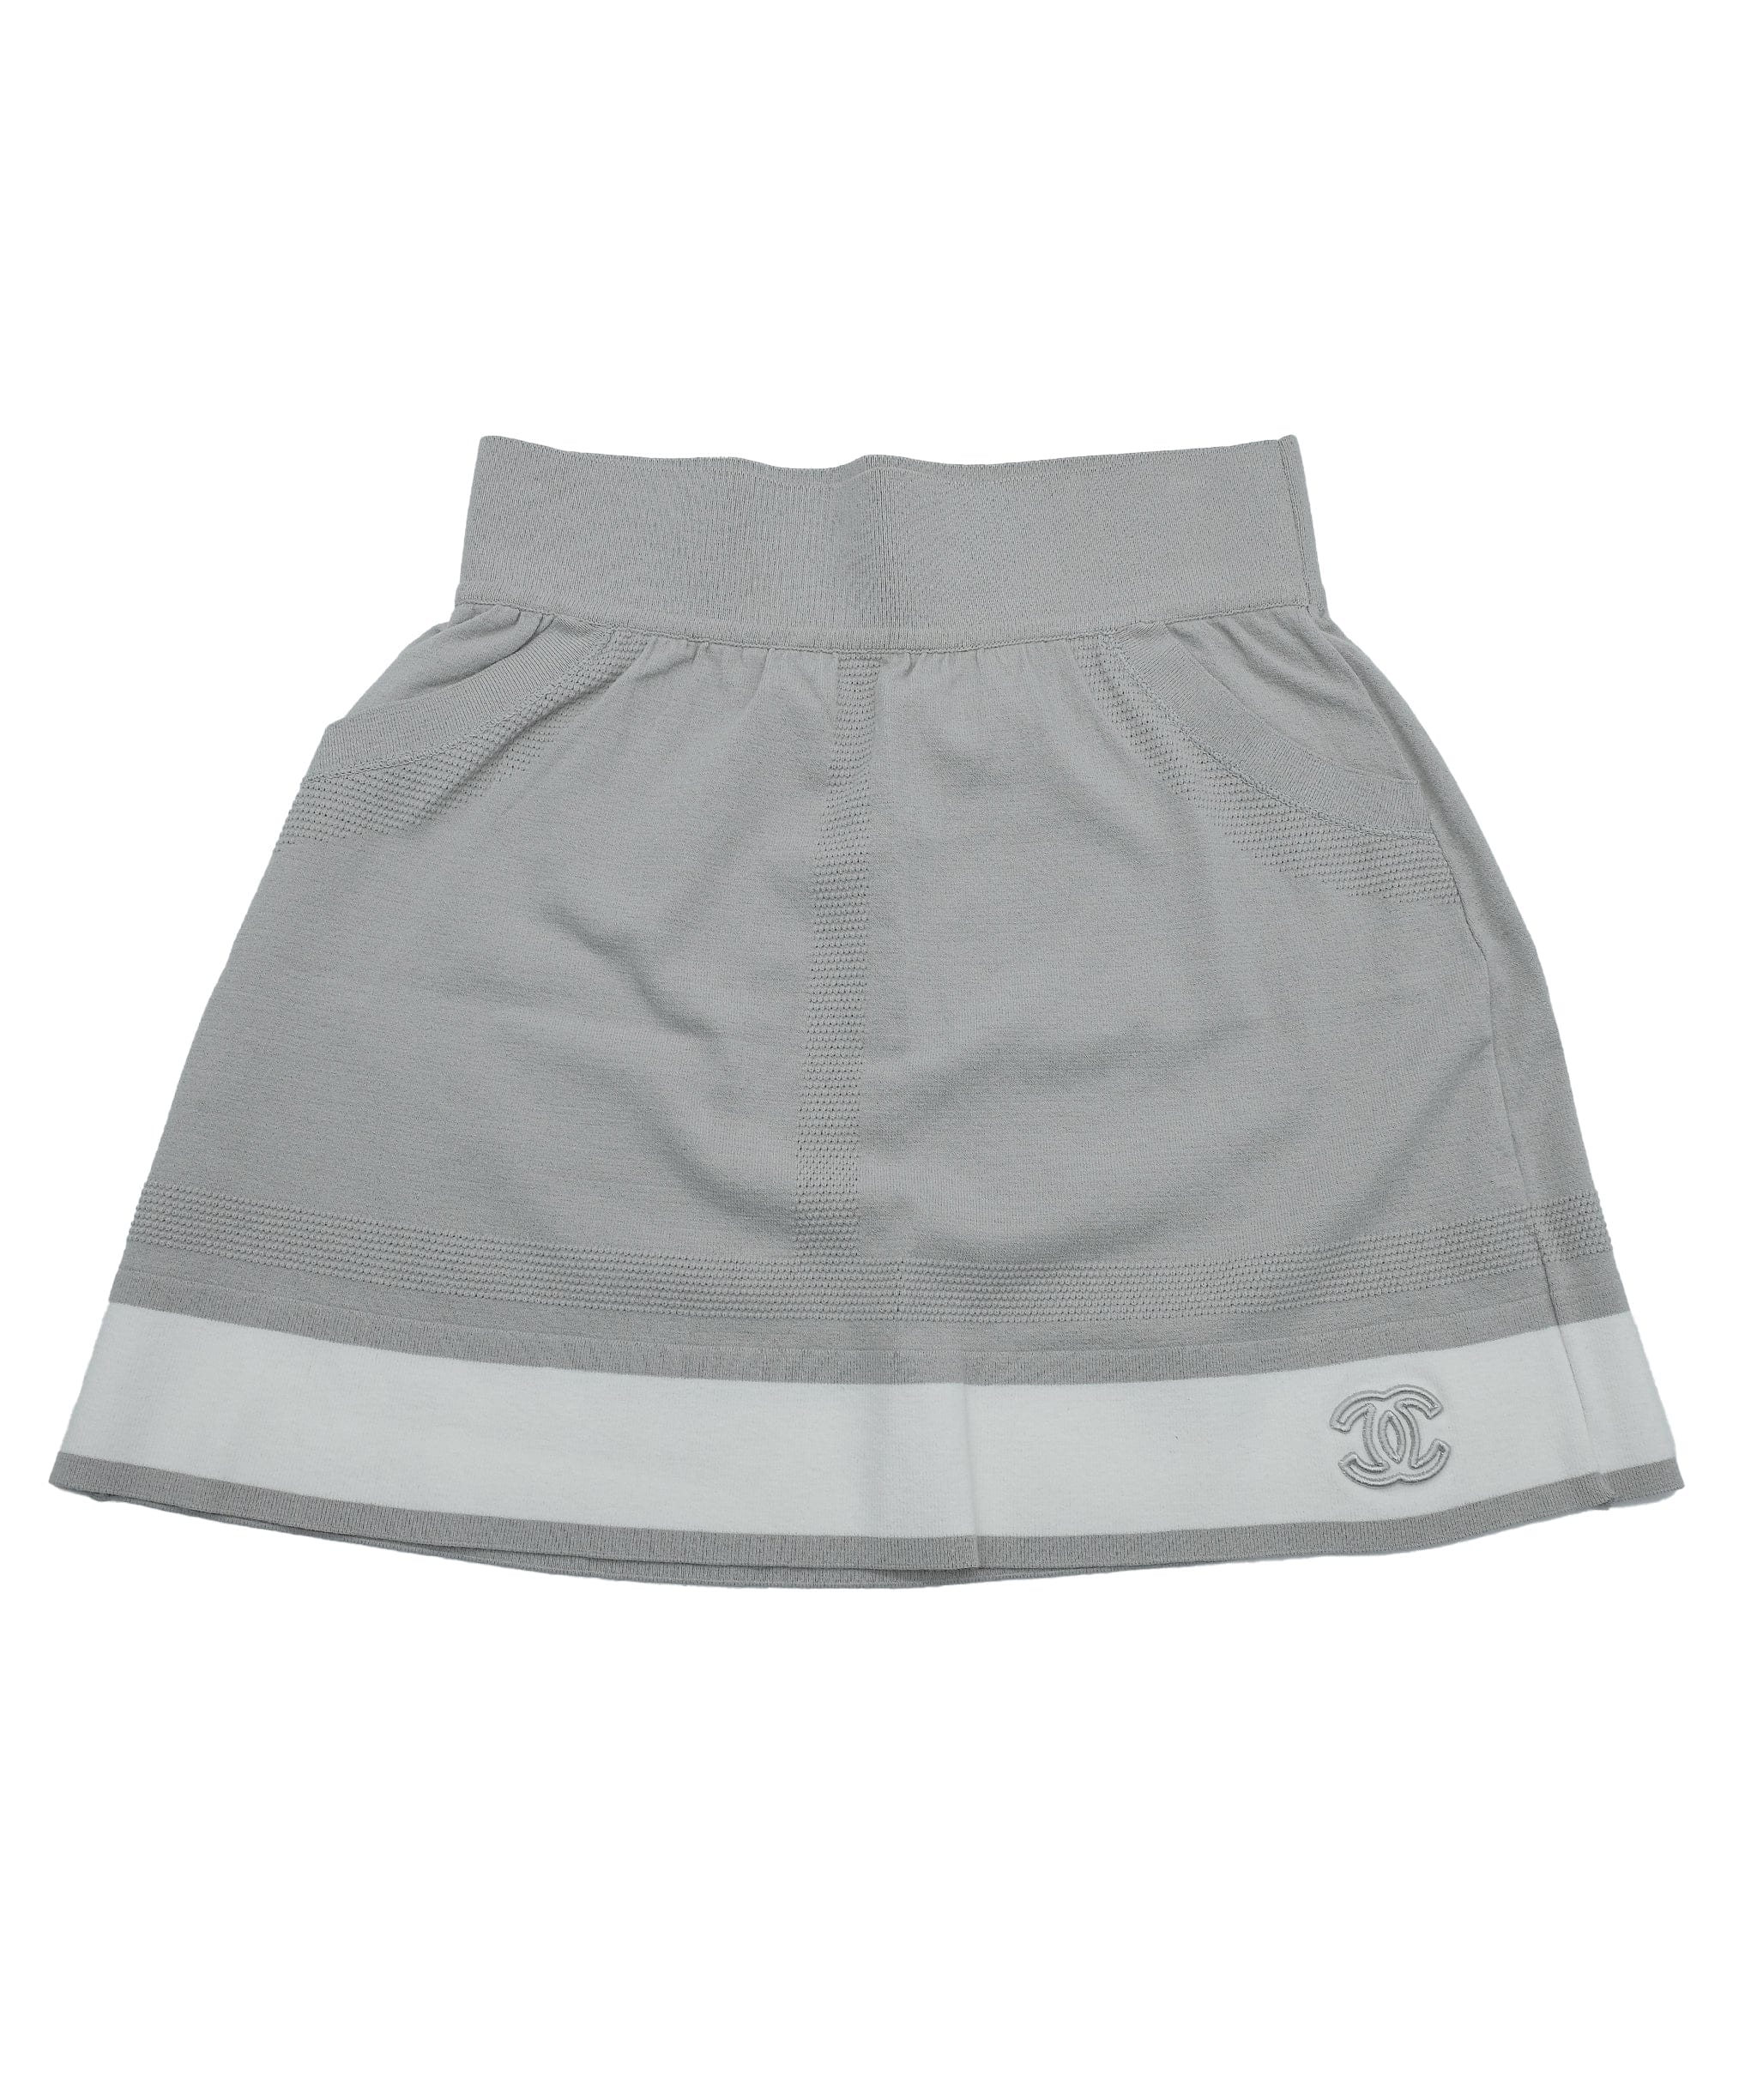 Chanel Chanel 10P Mini Skirt Gray
 ASL7488